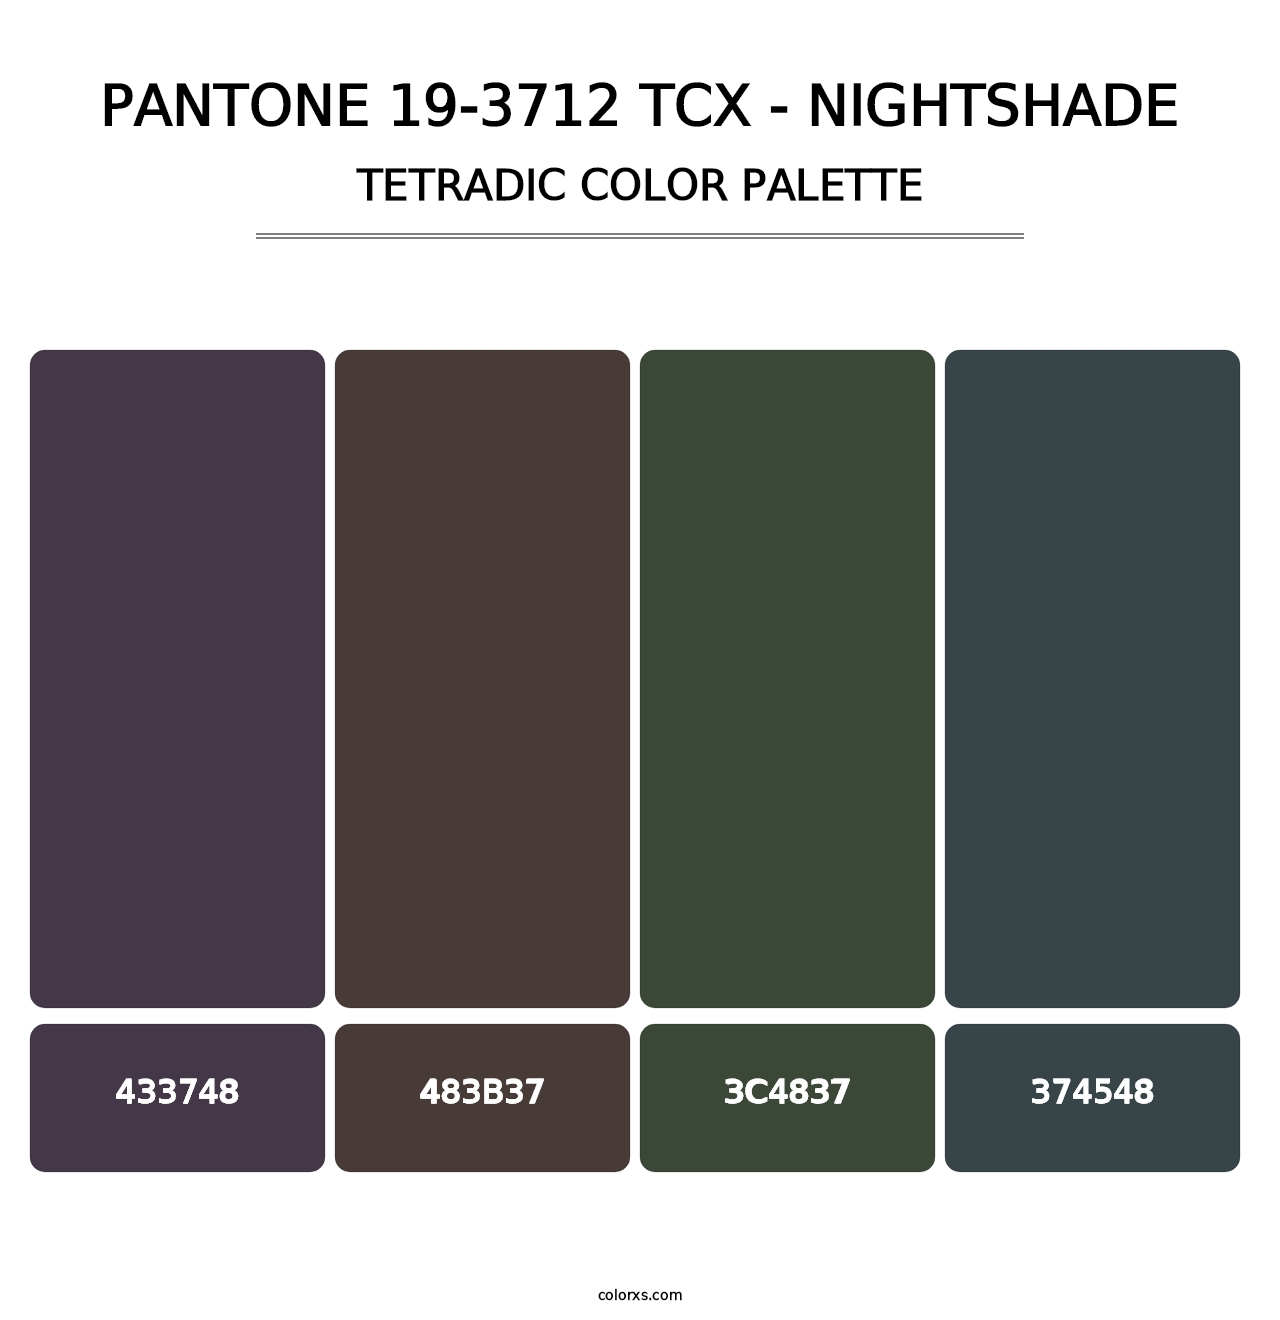 PANTONE 19-3712 TCX - Nightshade - Tetradic Color Palette